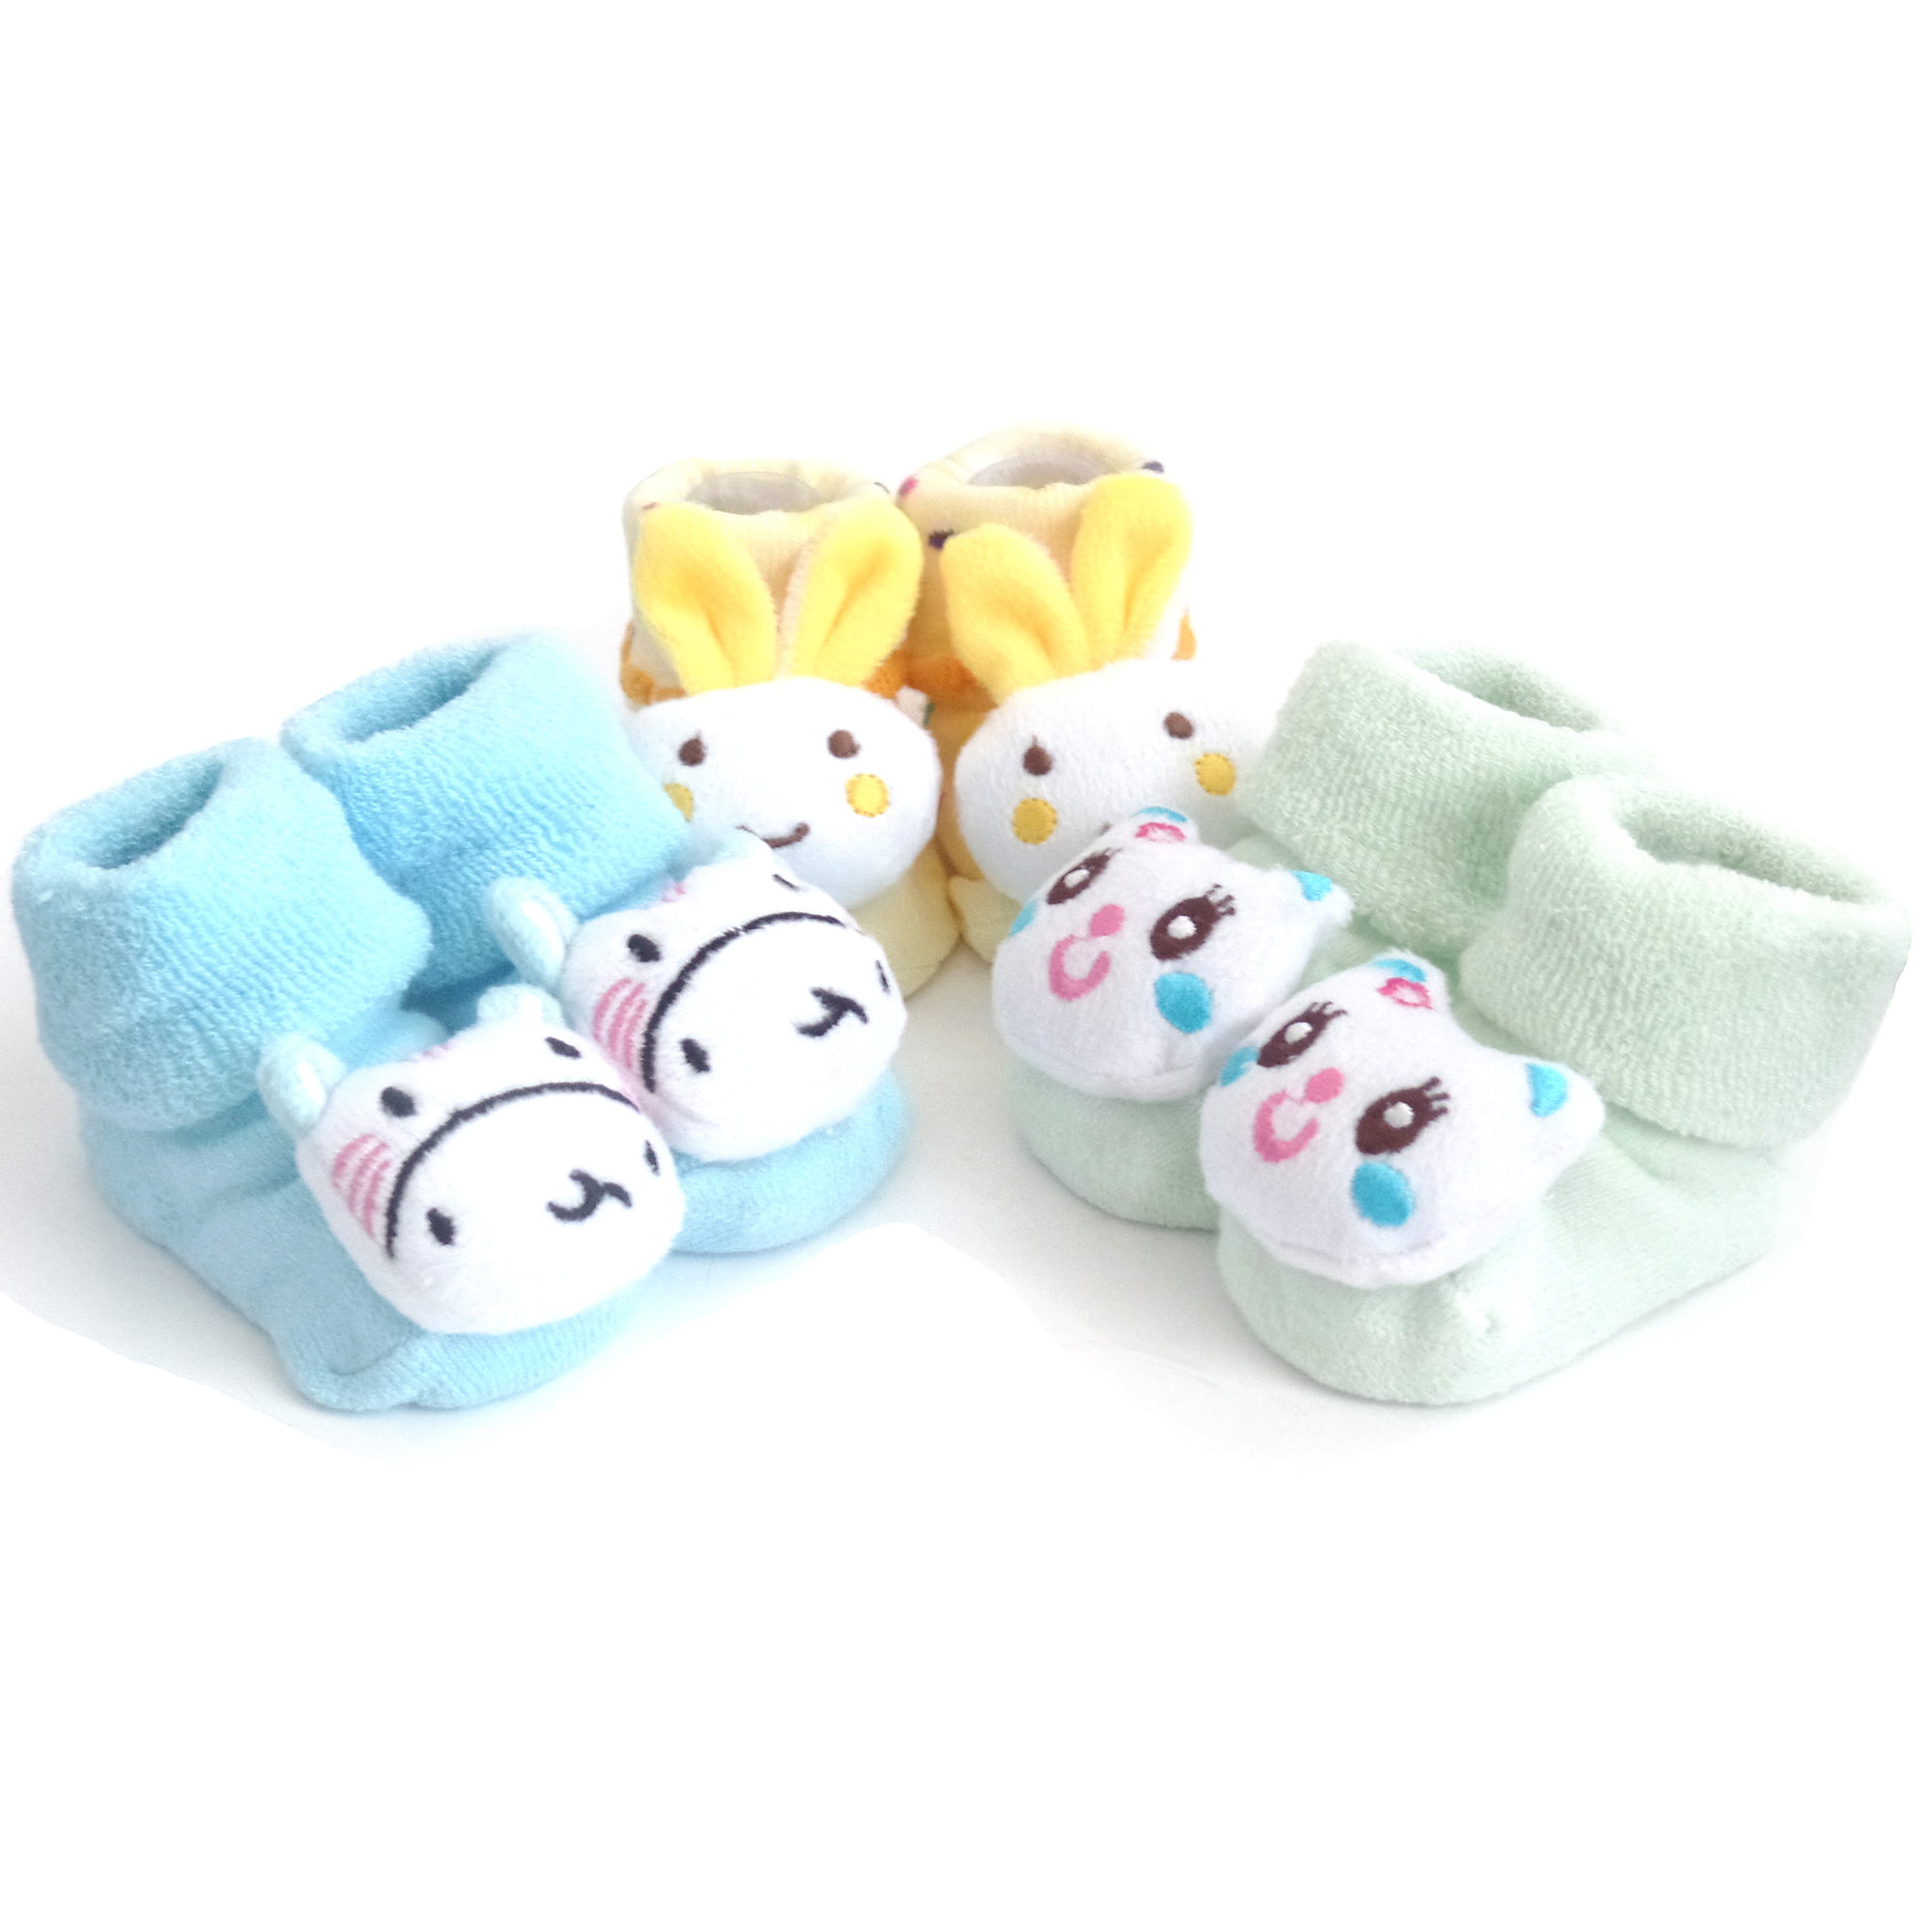 Baby Booties 3 pair assorted 0-3 month girl cute socks slippers 